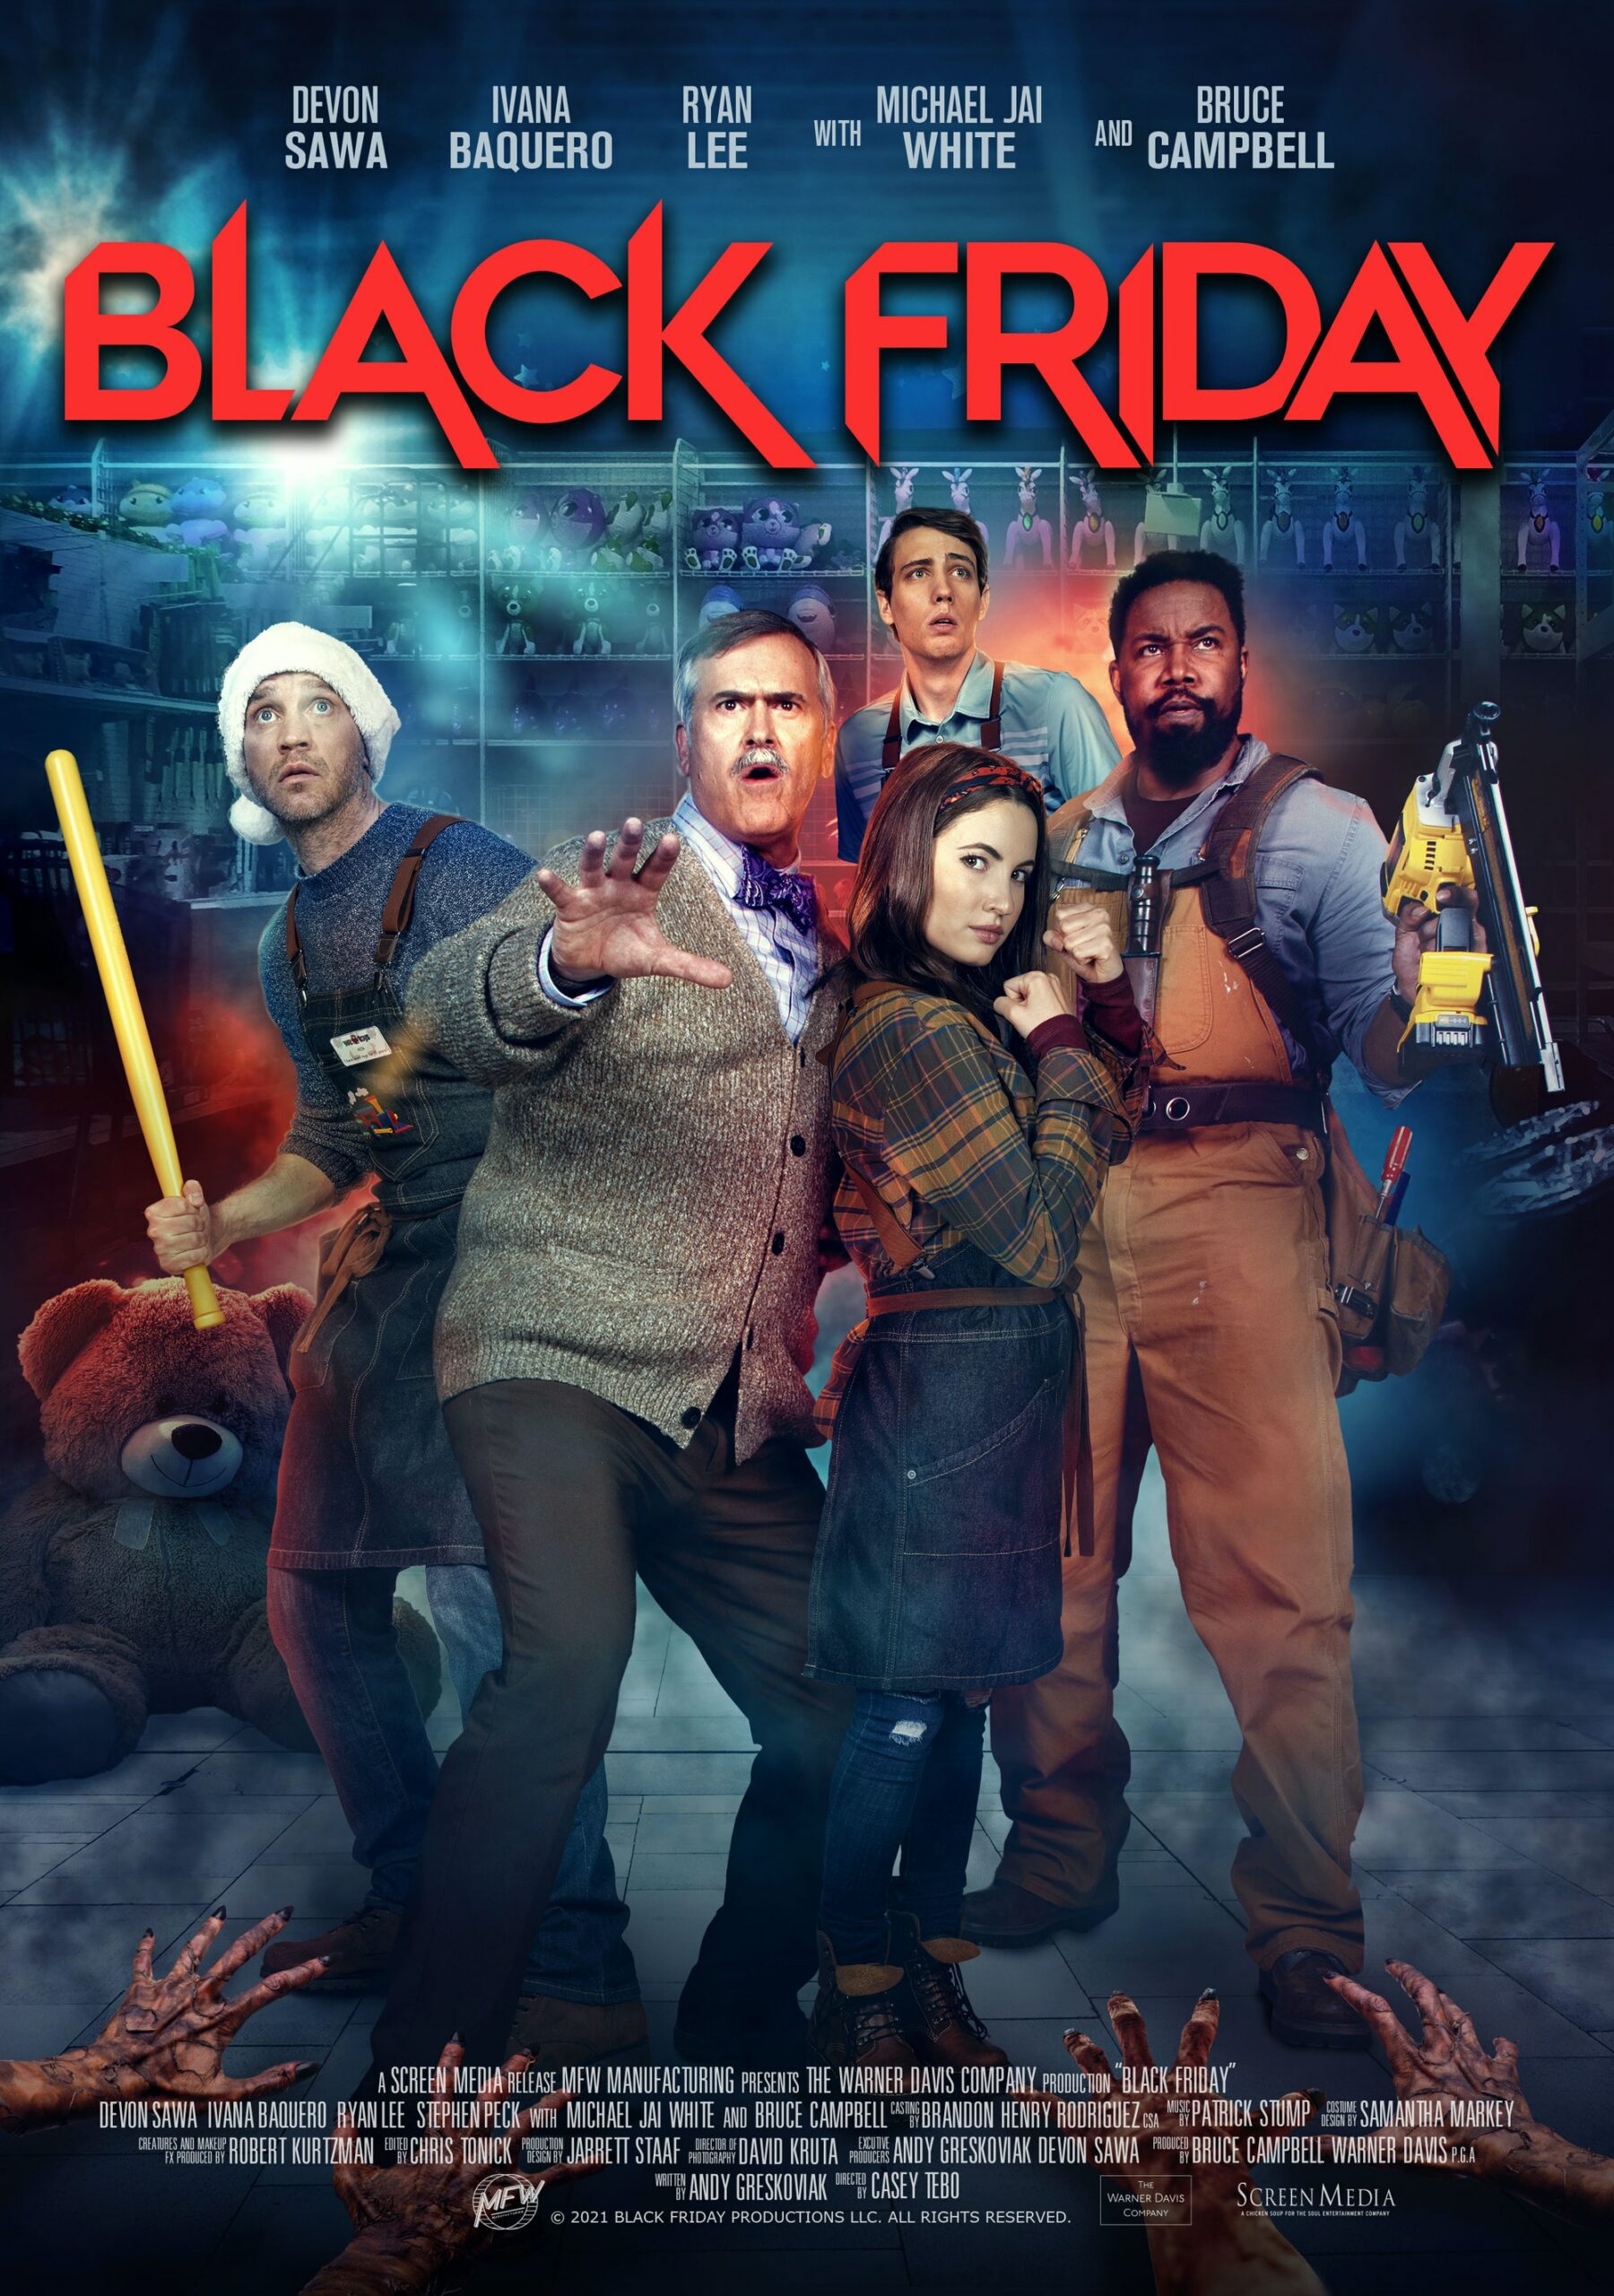 Black Friday - Horror-Komödie mit Bruce Campbell - Trailer -  horror-news.com - Horror, Splatter and more